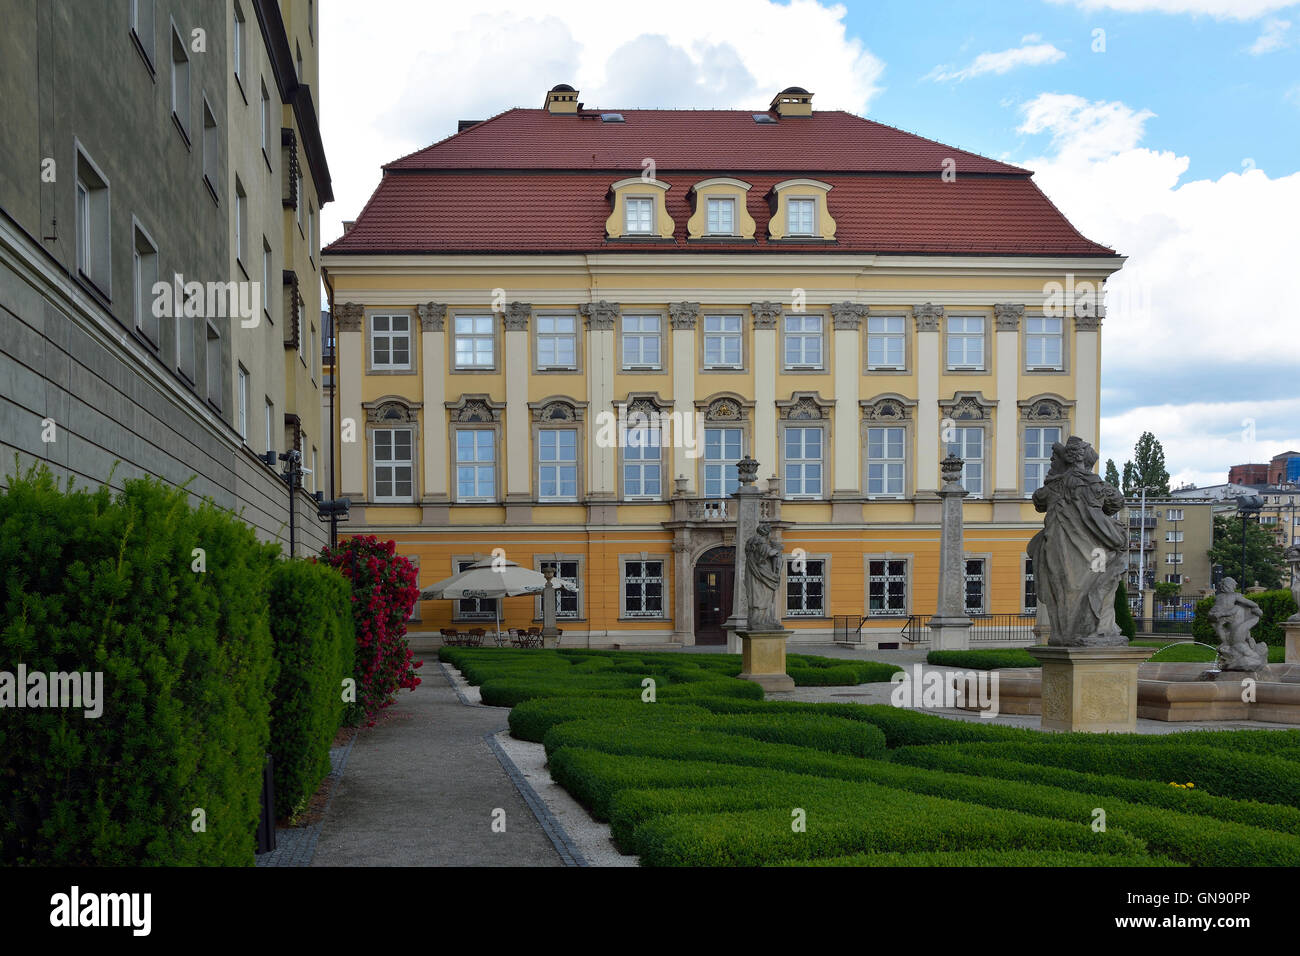 Royal Palace of Wroclaw in Poland - Palac Krolewski. Stock Photo